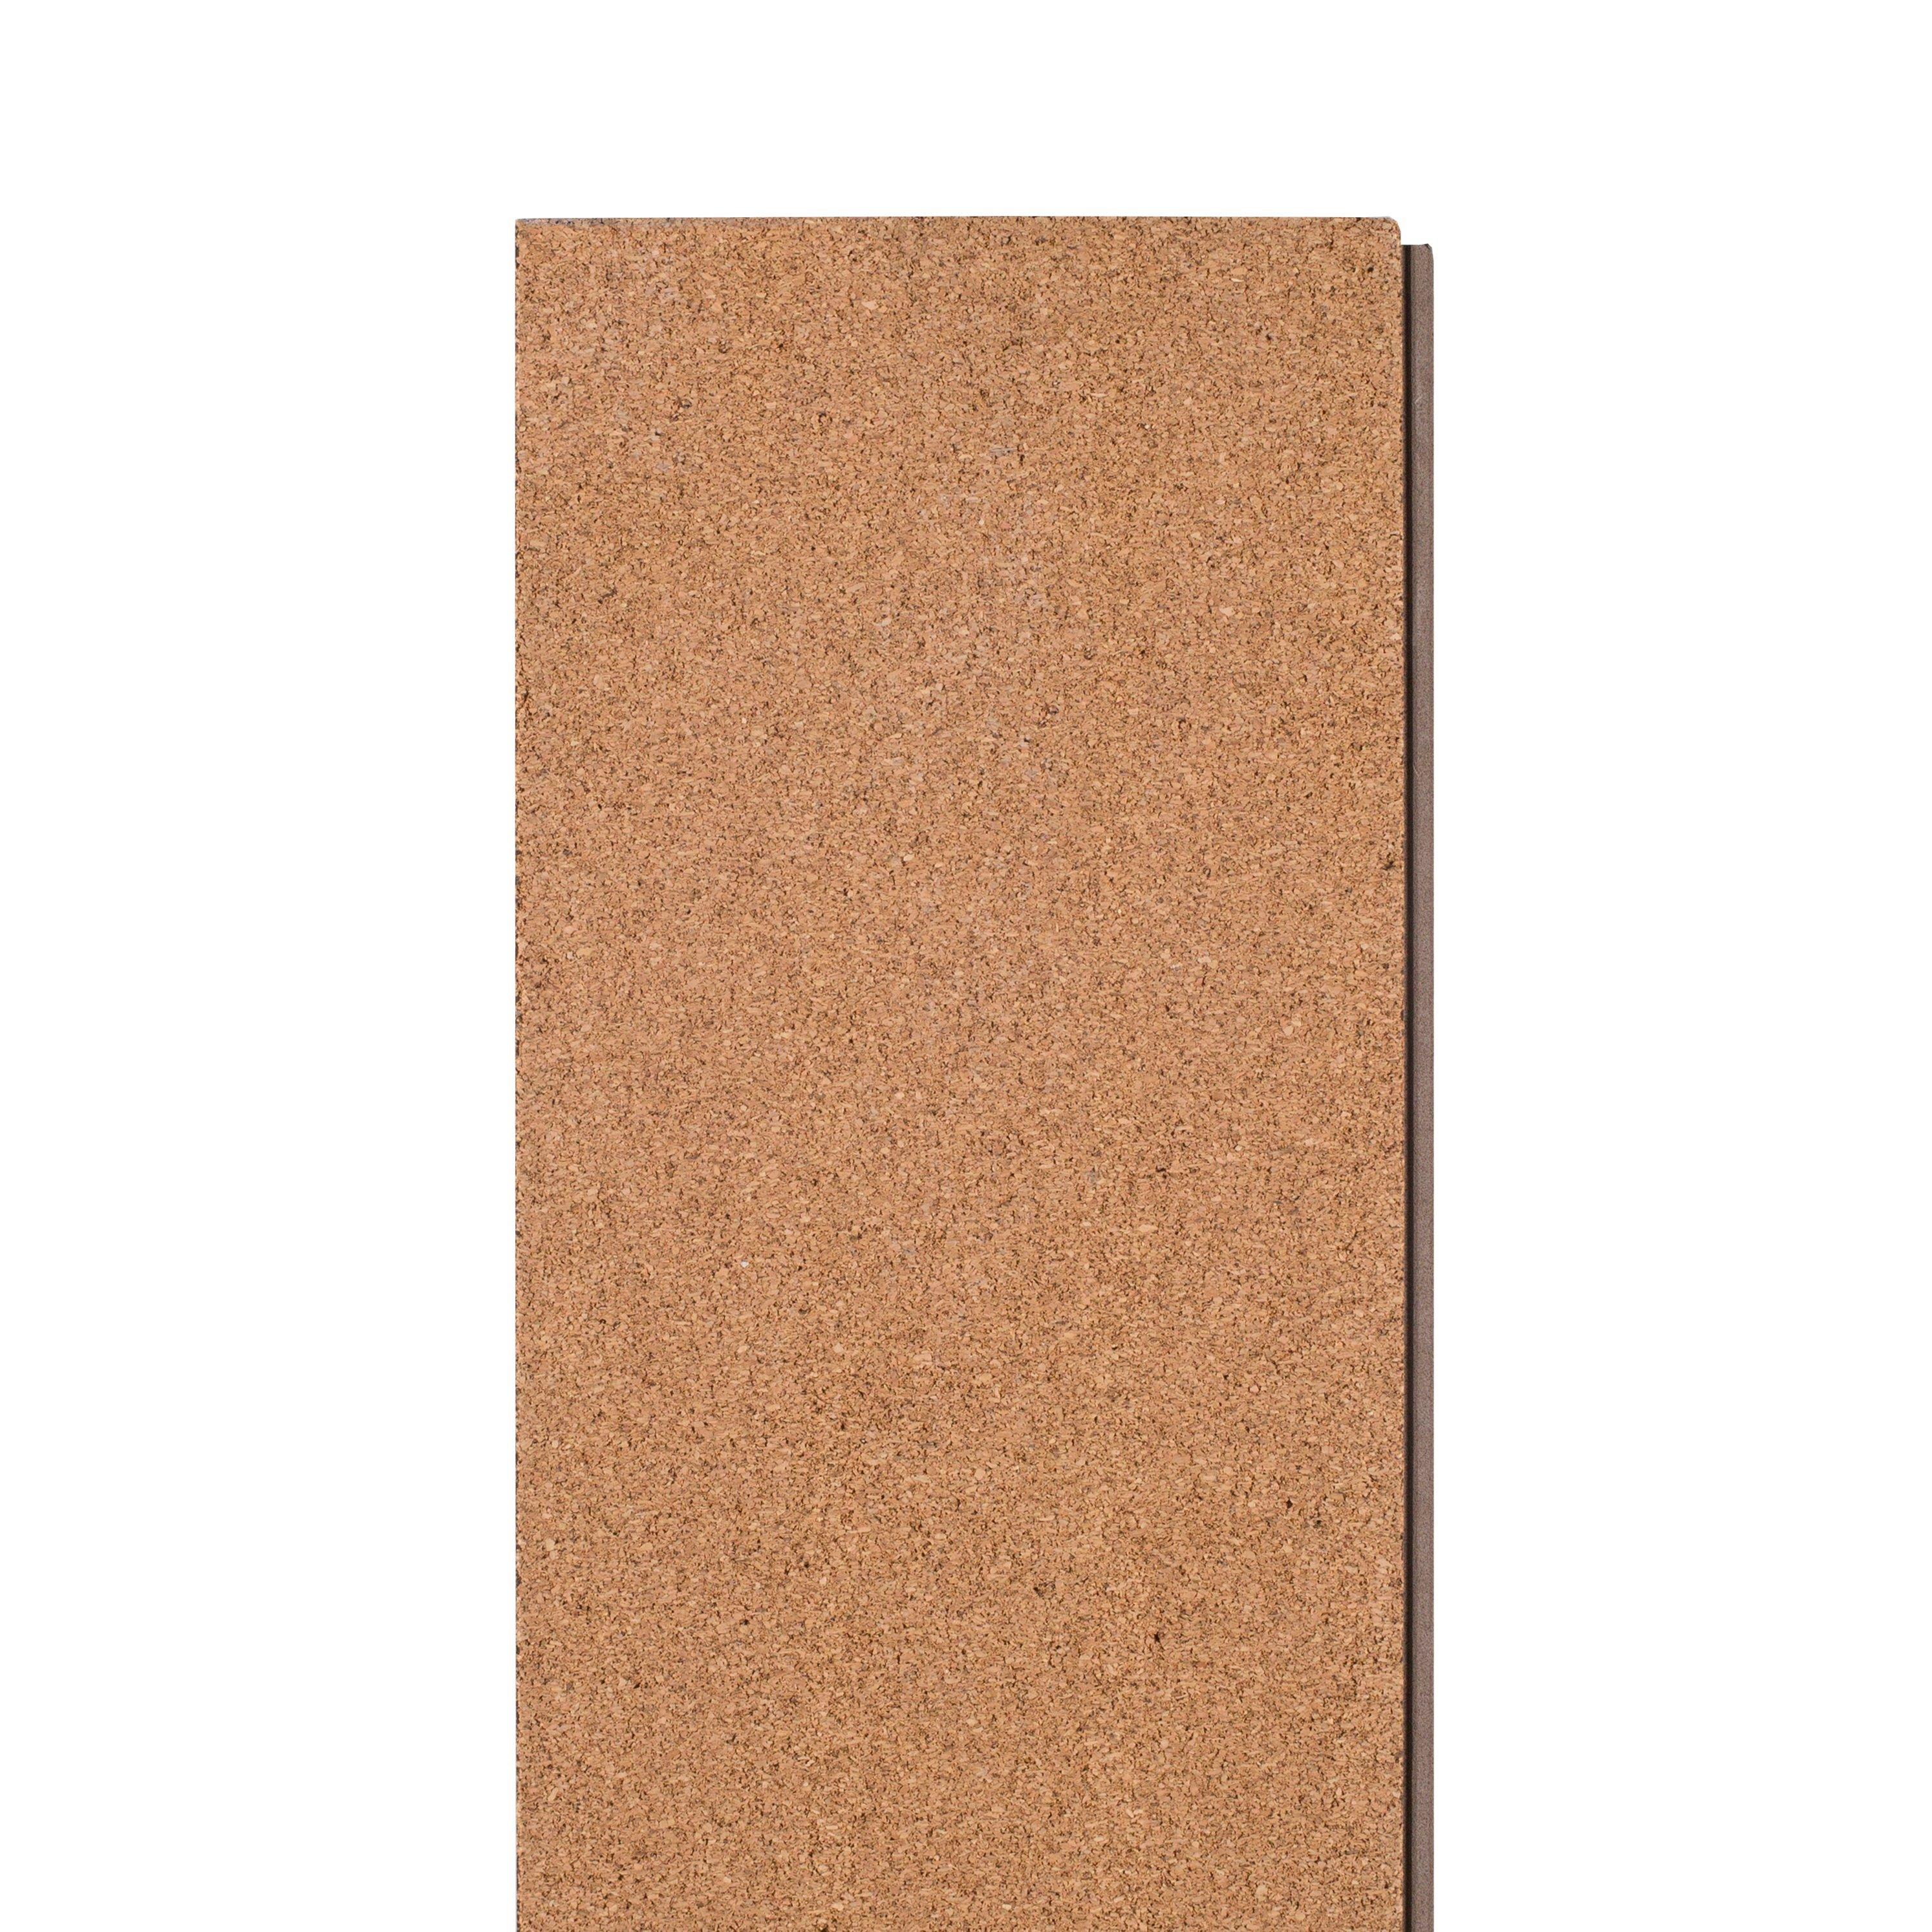 Strada Marble Rigid Core Luxury Vinyl Tile - Cork Back